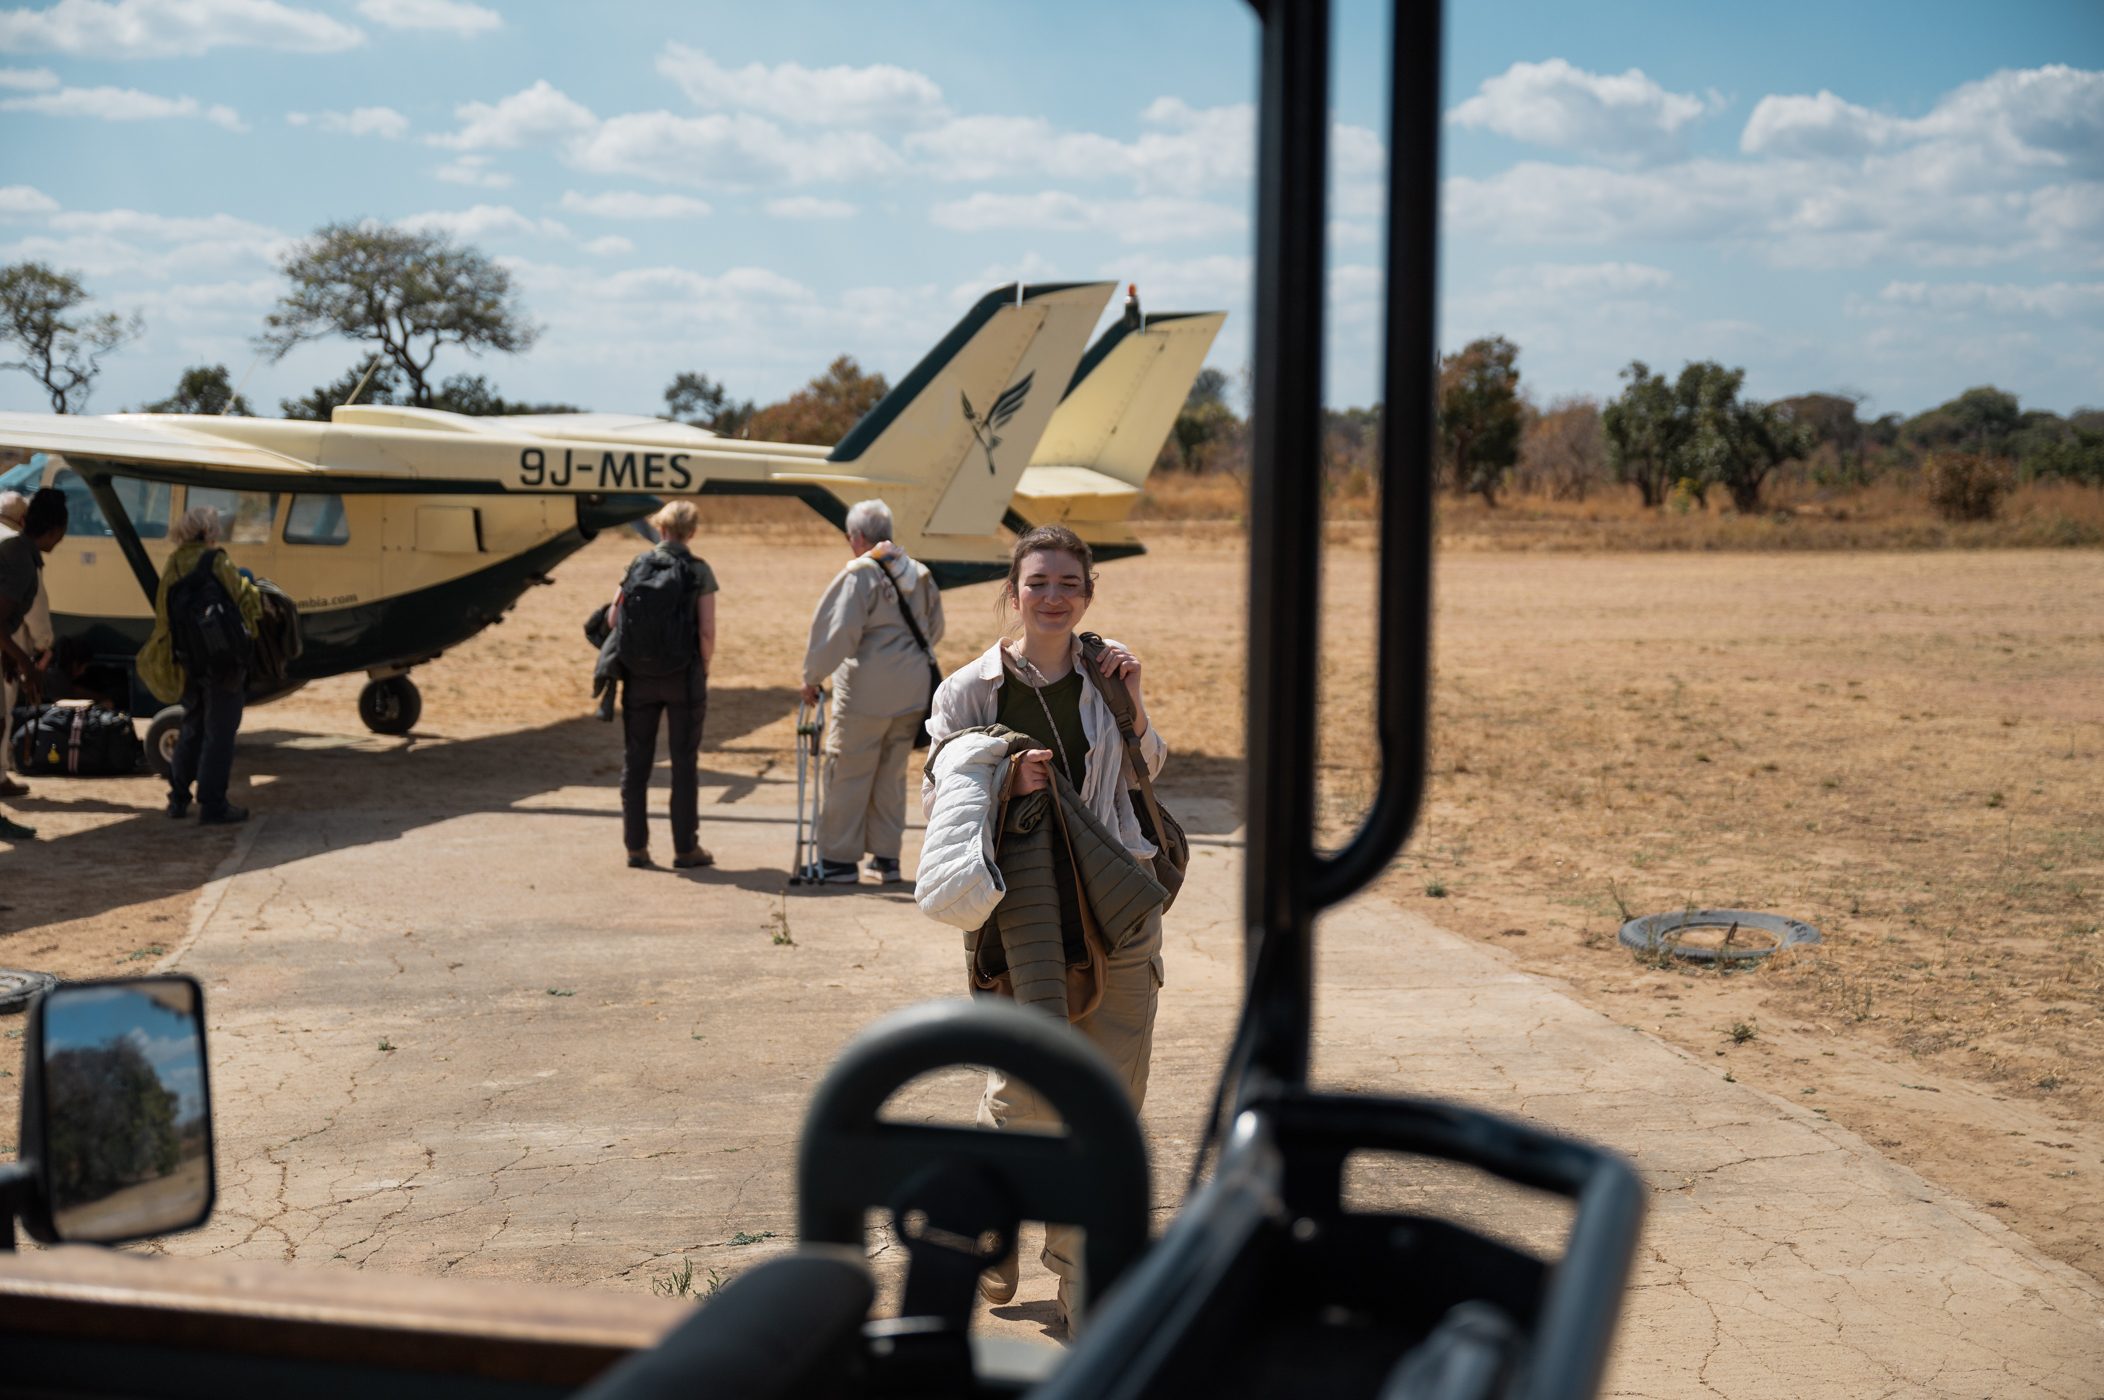 Kady leaving the bush plane in Zambia's Kafue National Park